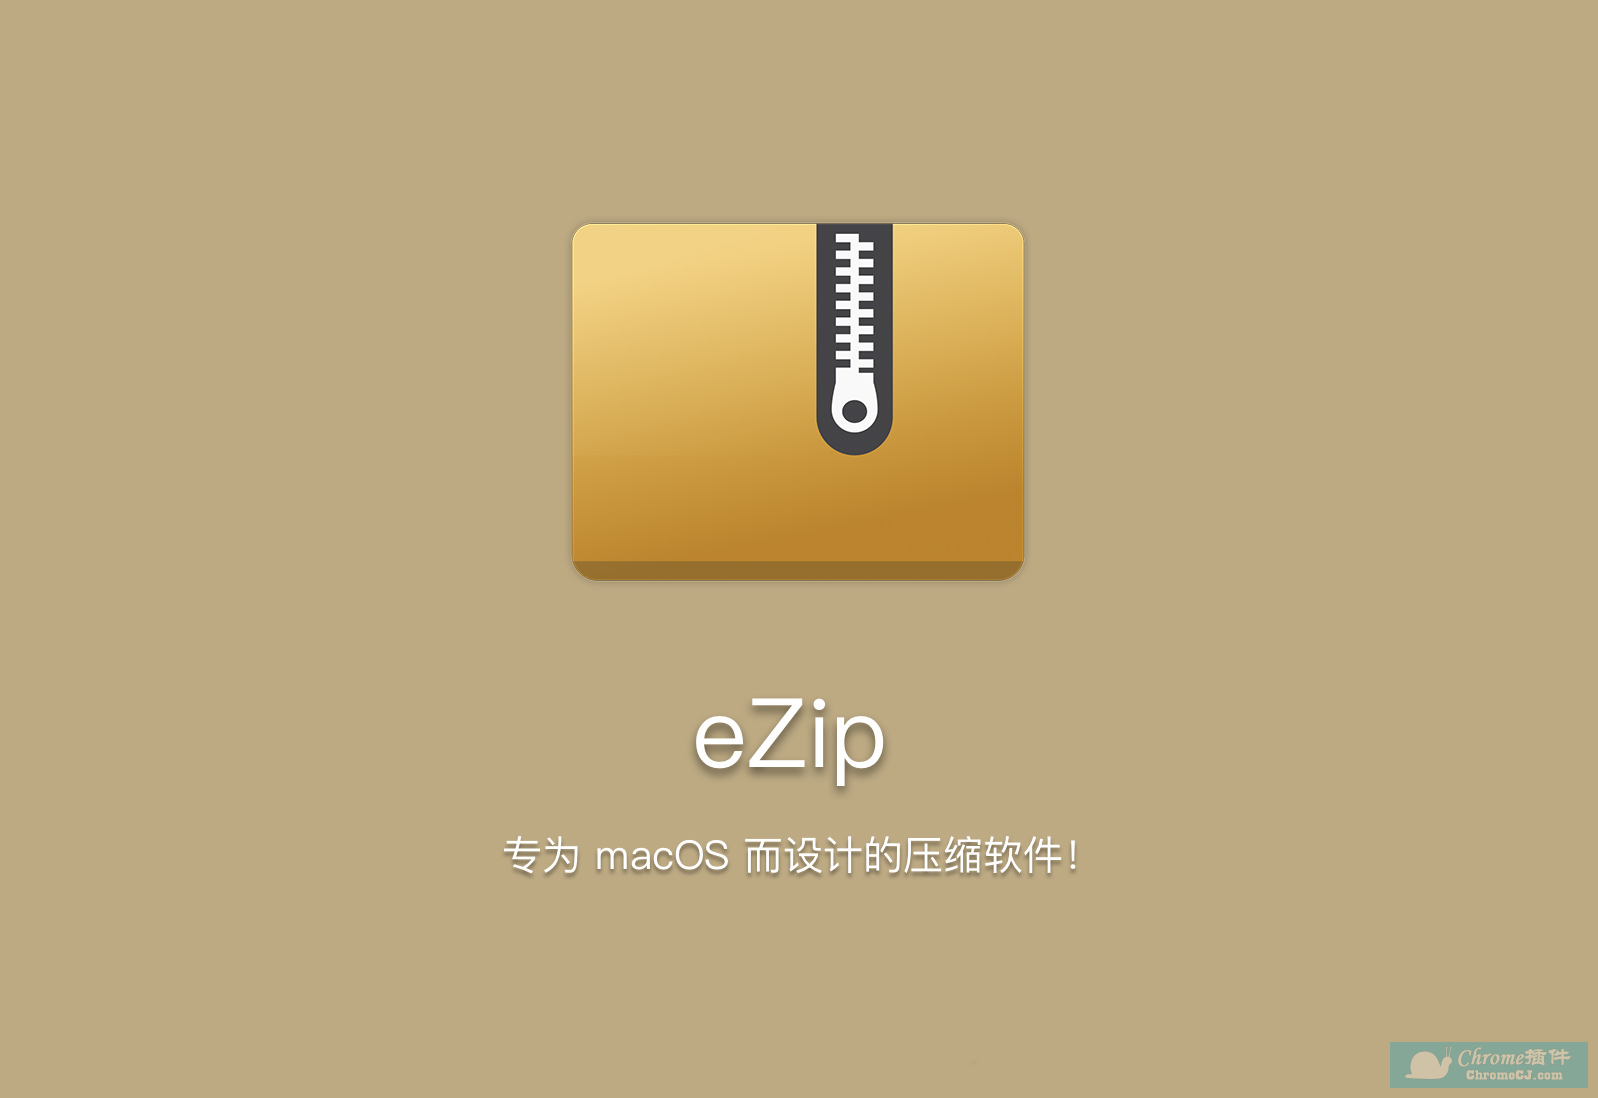 eZip - macOS 免费压缩软件(支持文件预览/加密解密)